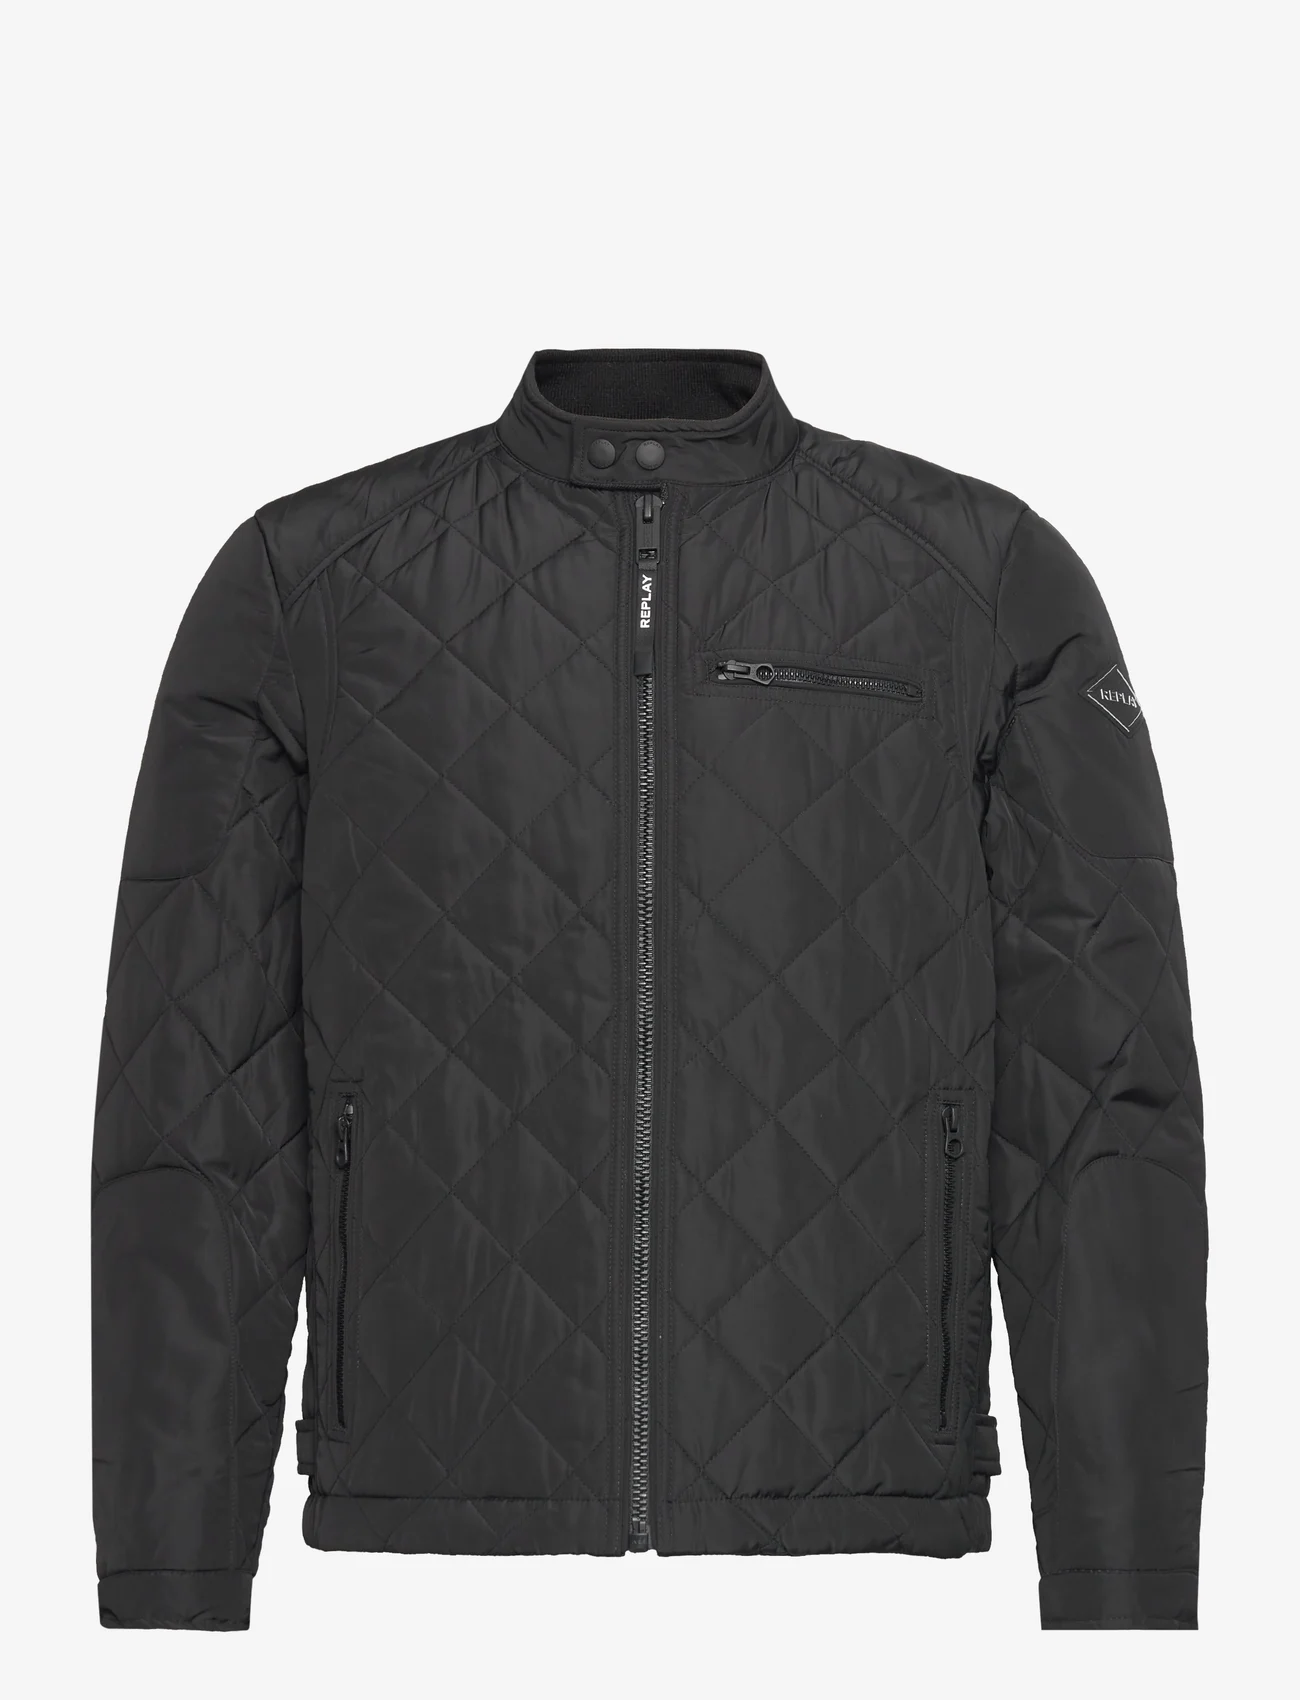 Replay - Jacket REGULAR - spring jackets - black - 0